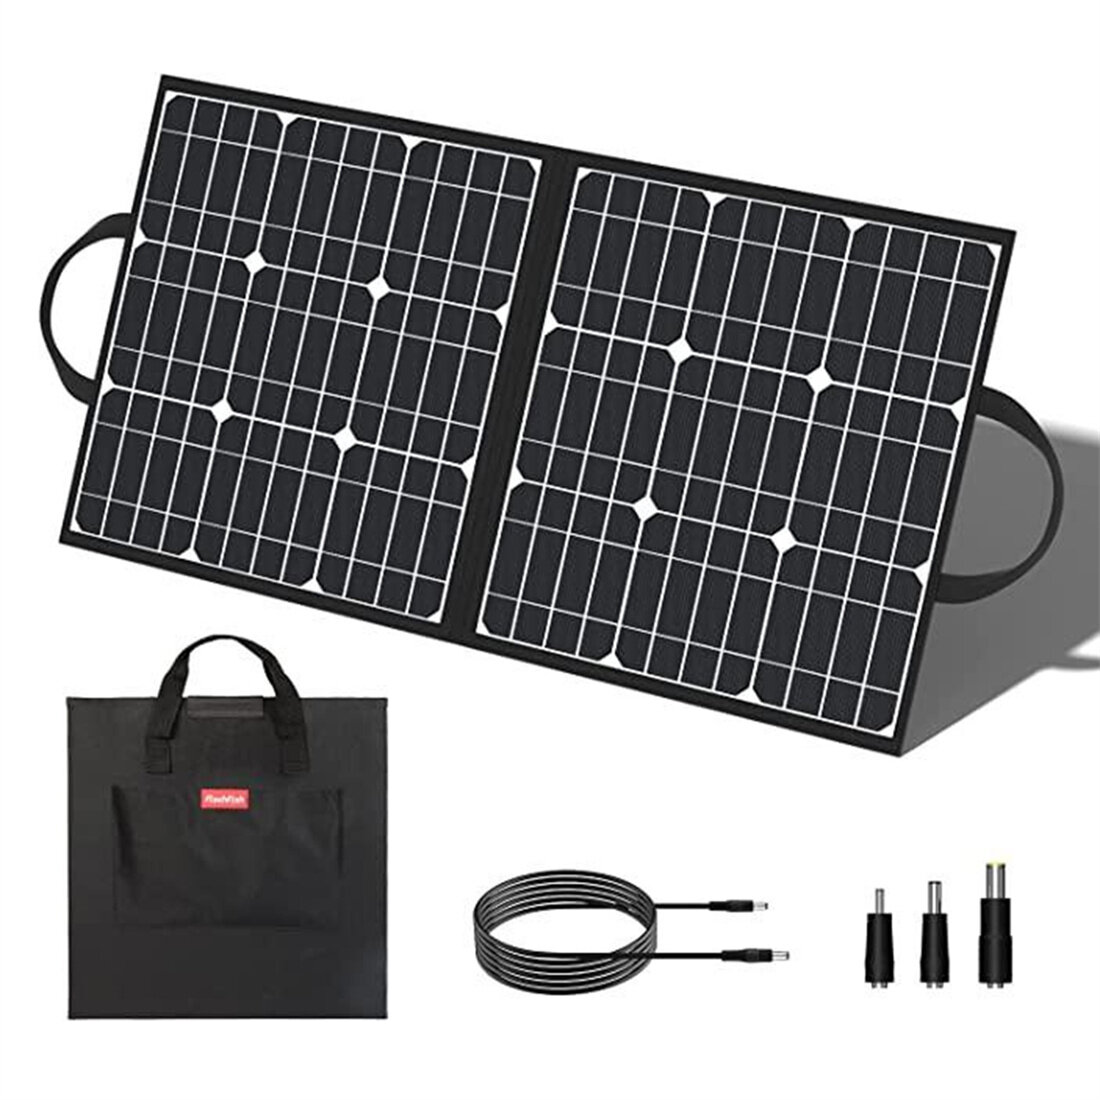 [Russia Direct] FlashFish 50W 18V Portable Solar Panel 5V USB Foldable Solar Cells Outdoor Power Supply Camping RV Travel